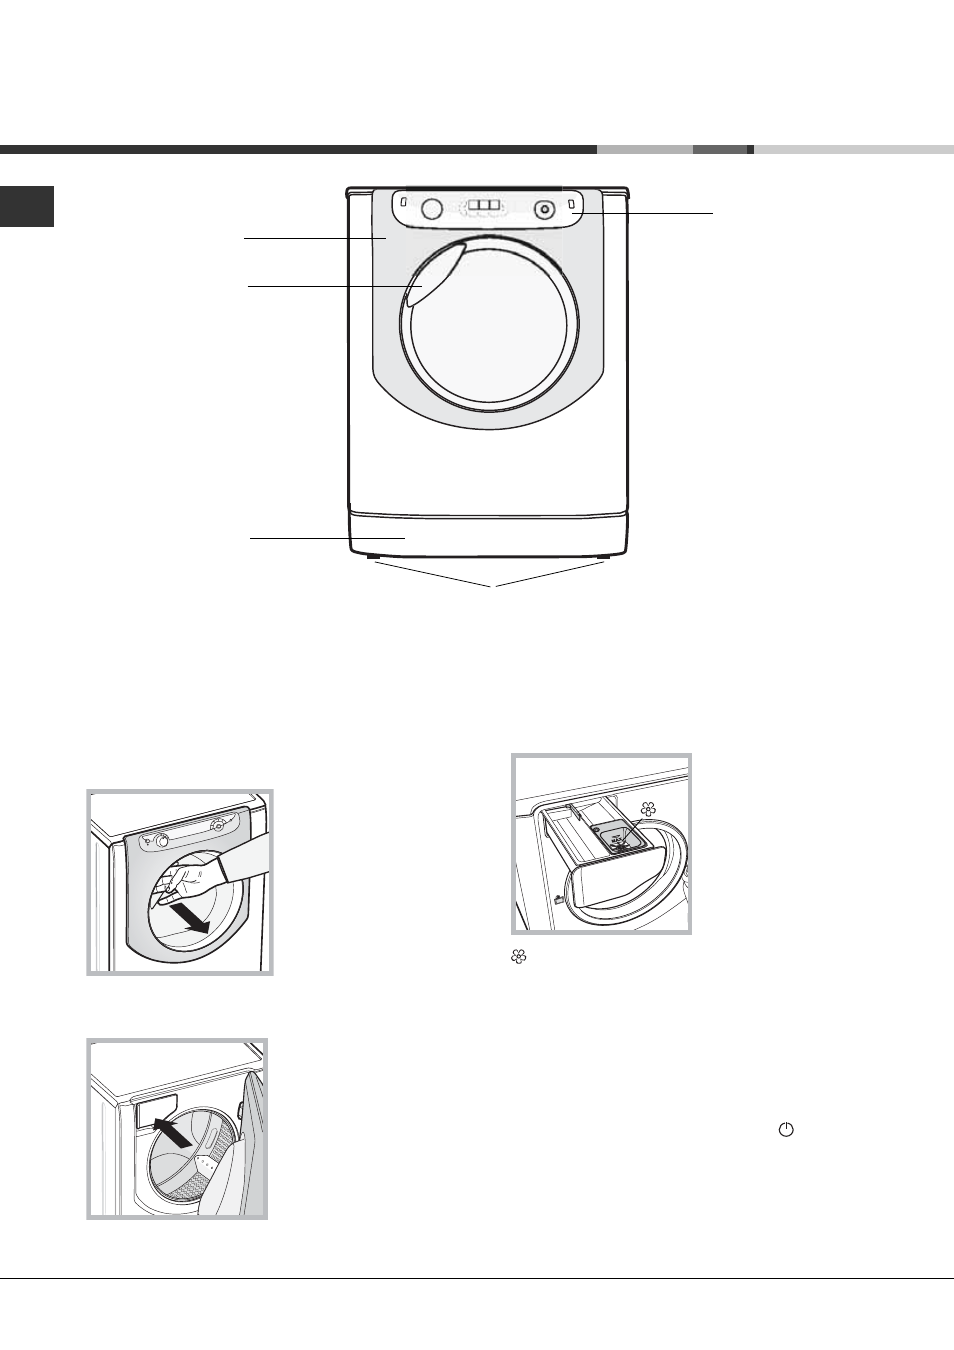 Description Of The Machine Hotpoint Aqualtis Washing Machine